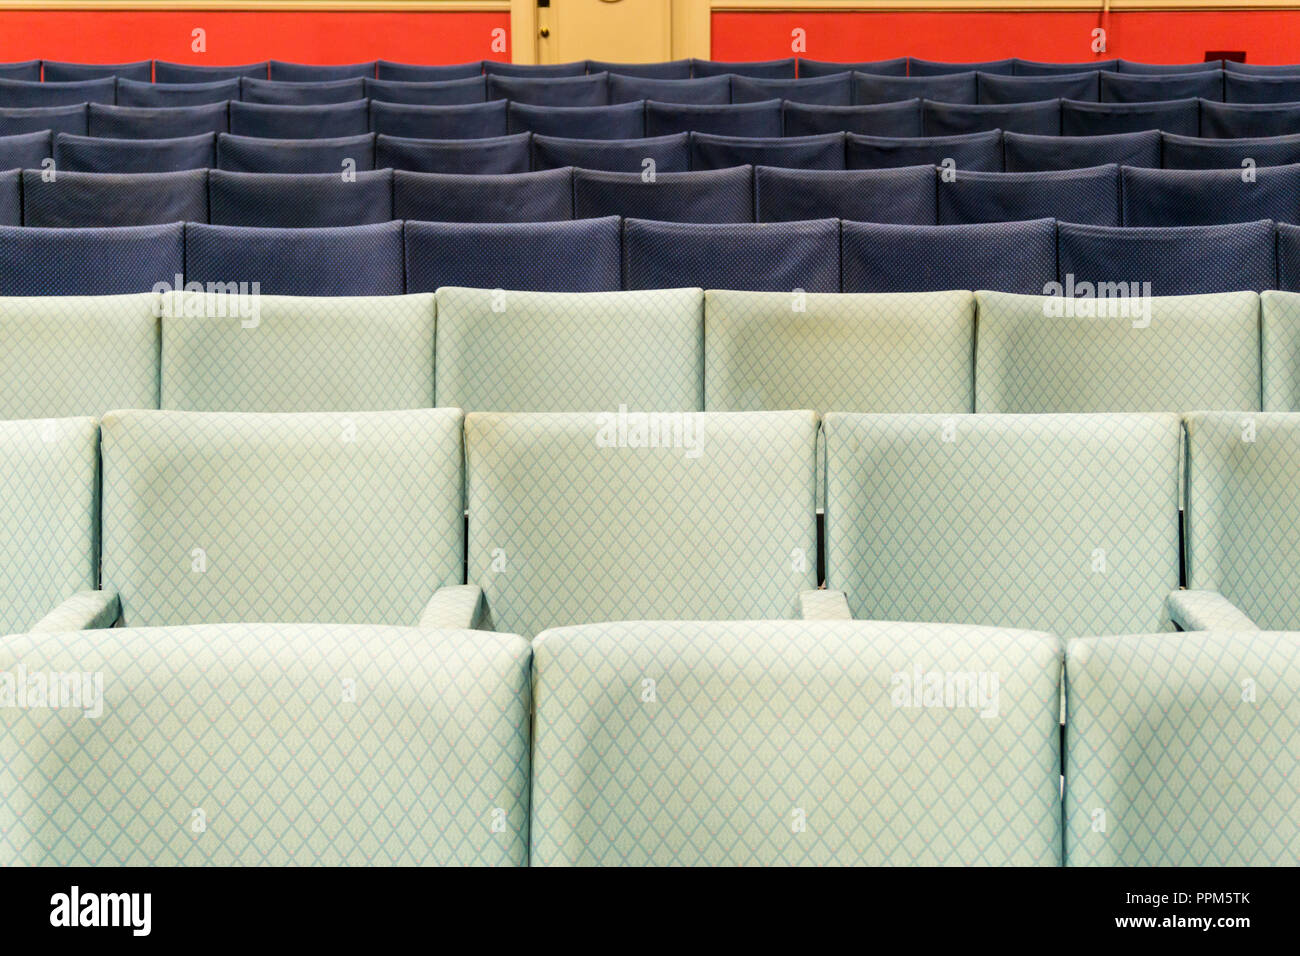 Rows of empty cinema or theatre seats. Stock Photo